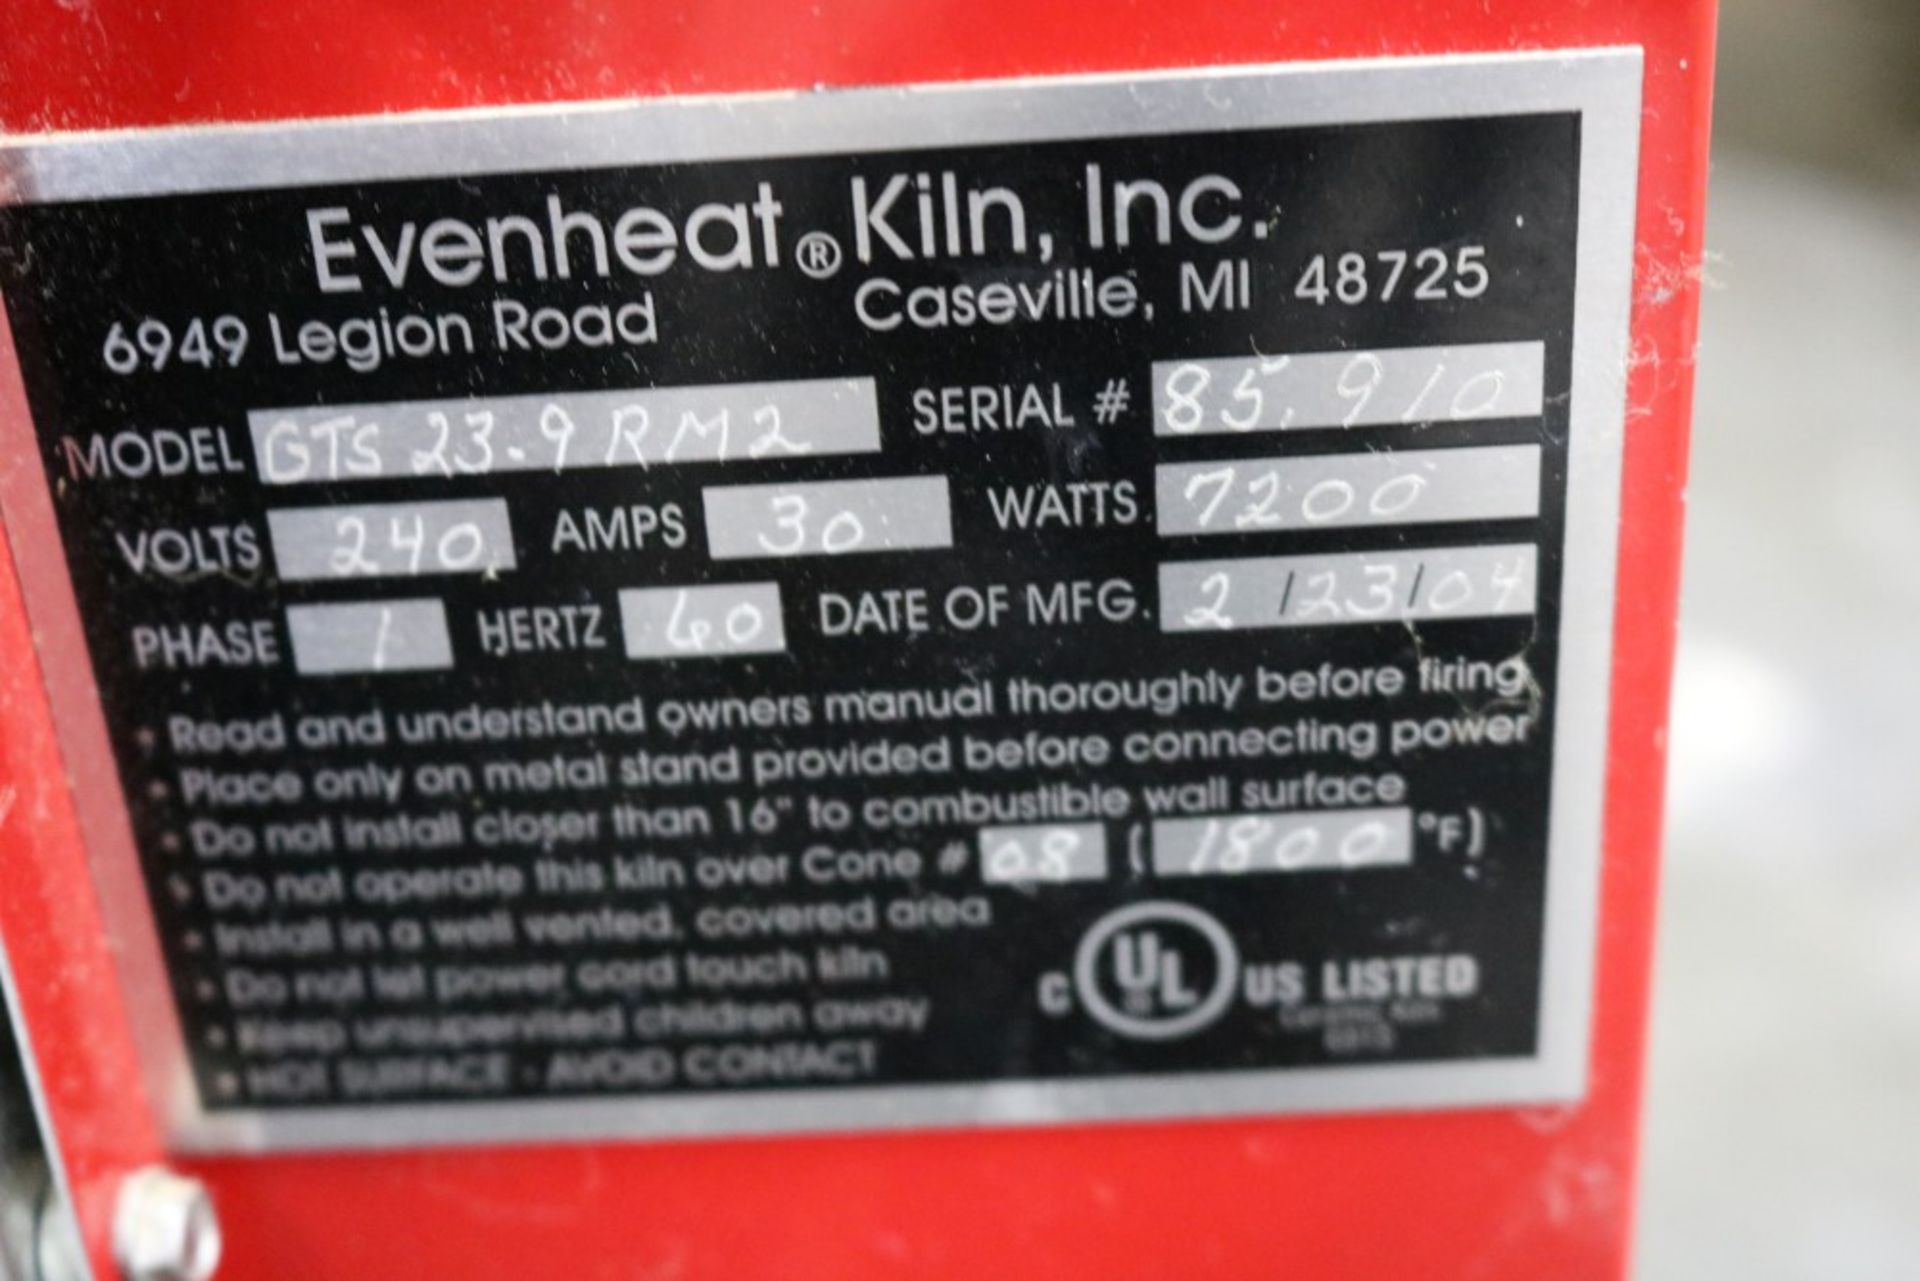 2004 Evenheat Kiln Inc, Rampmaster II, Model GTS 23.9RM2, SN 85.910, 240V, 30 AMPS, 7200 Watts, - Image 3 of 11